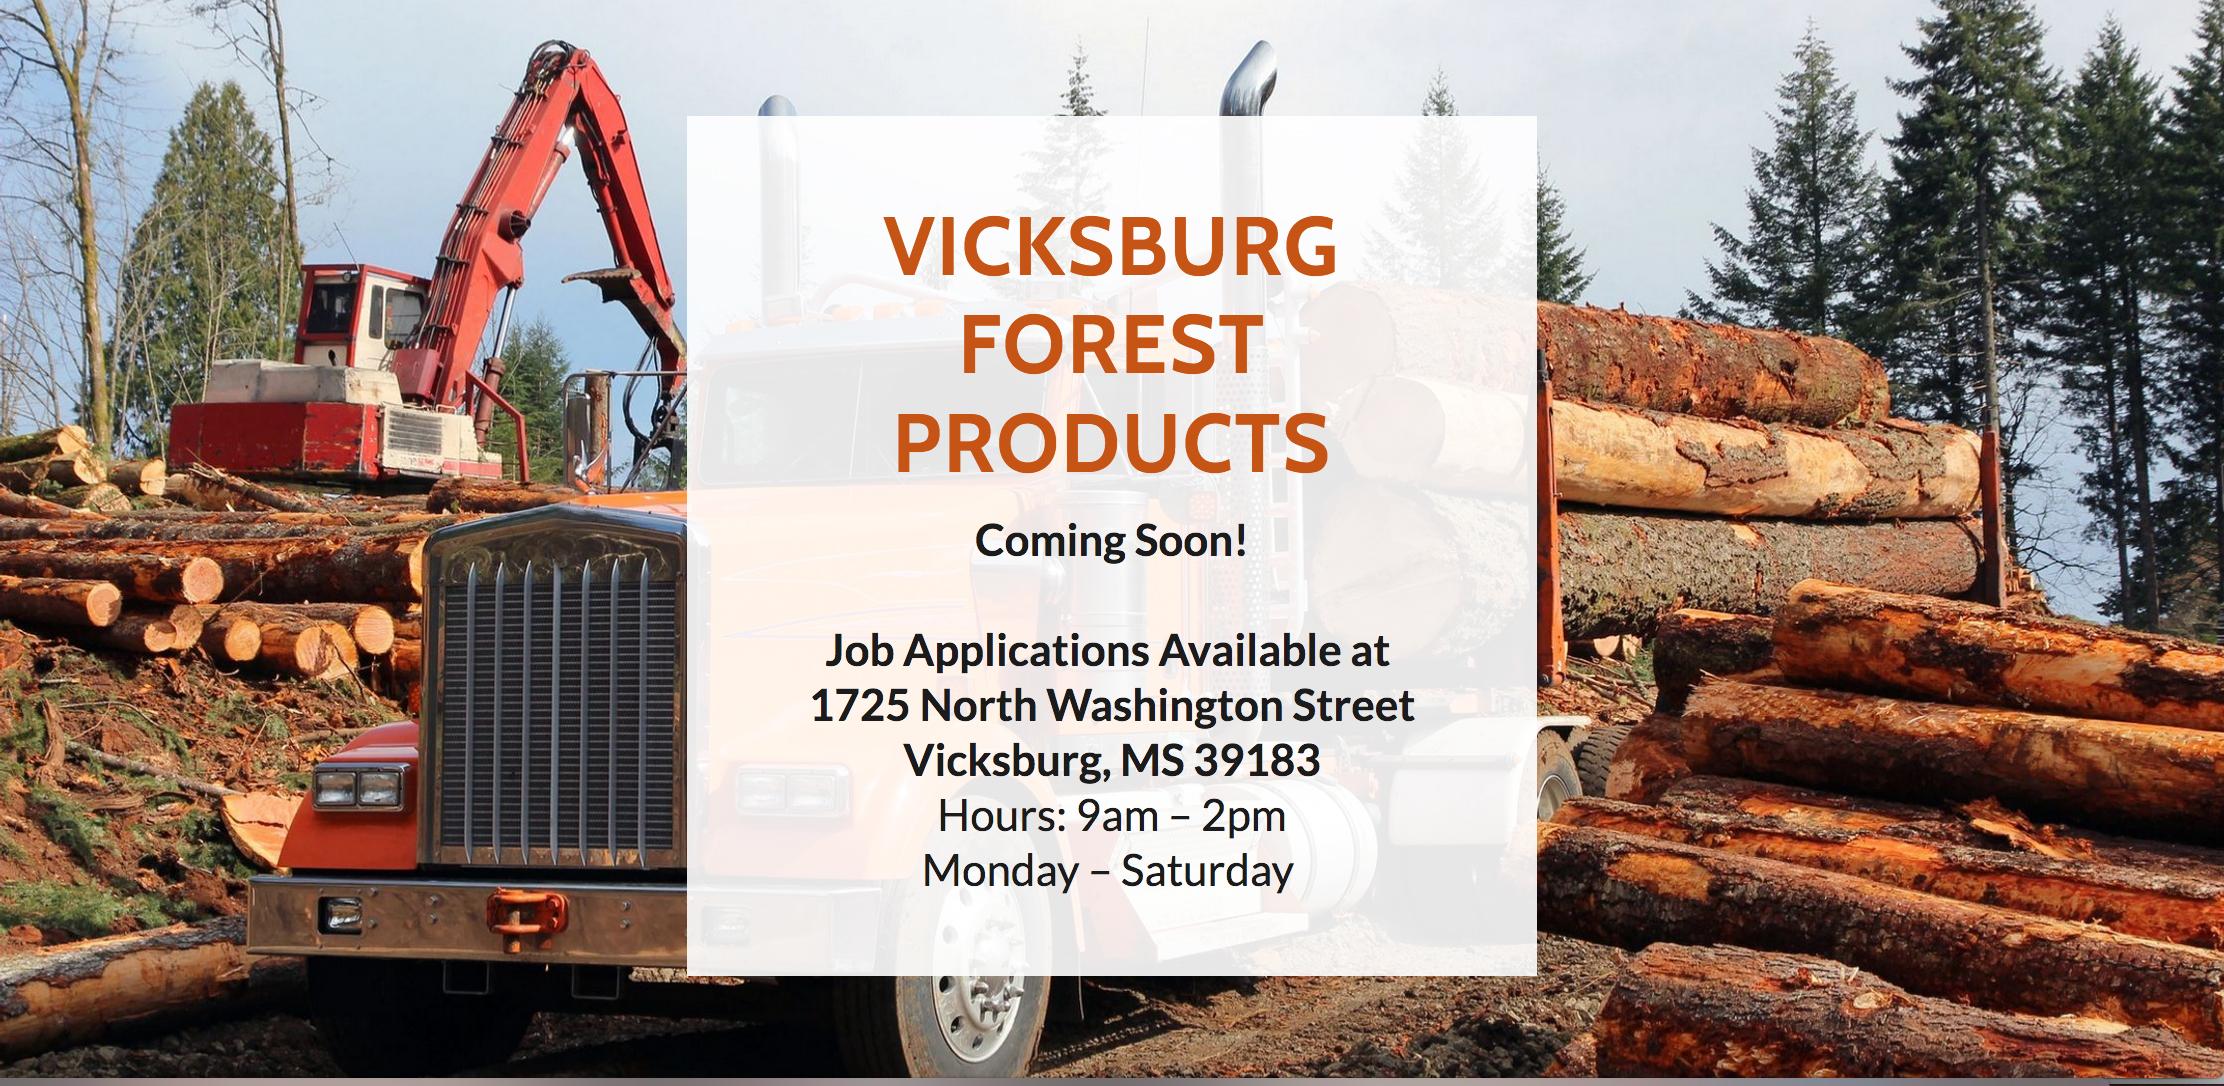 vicksburg-forest-products.jpg